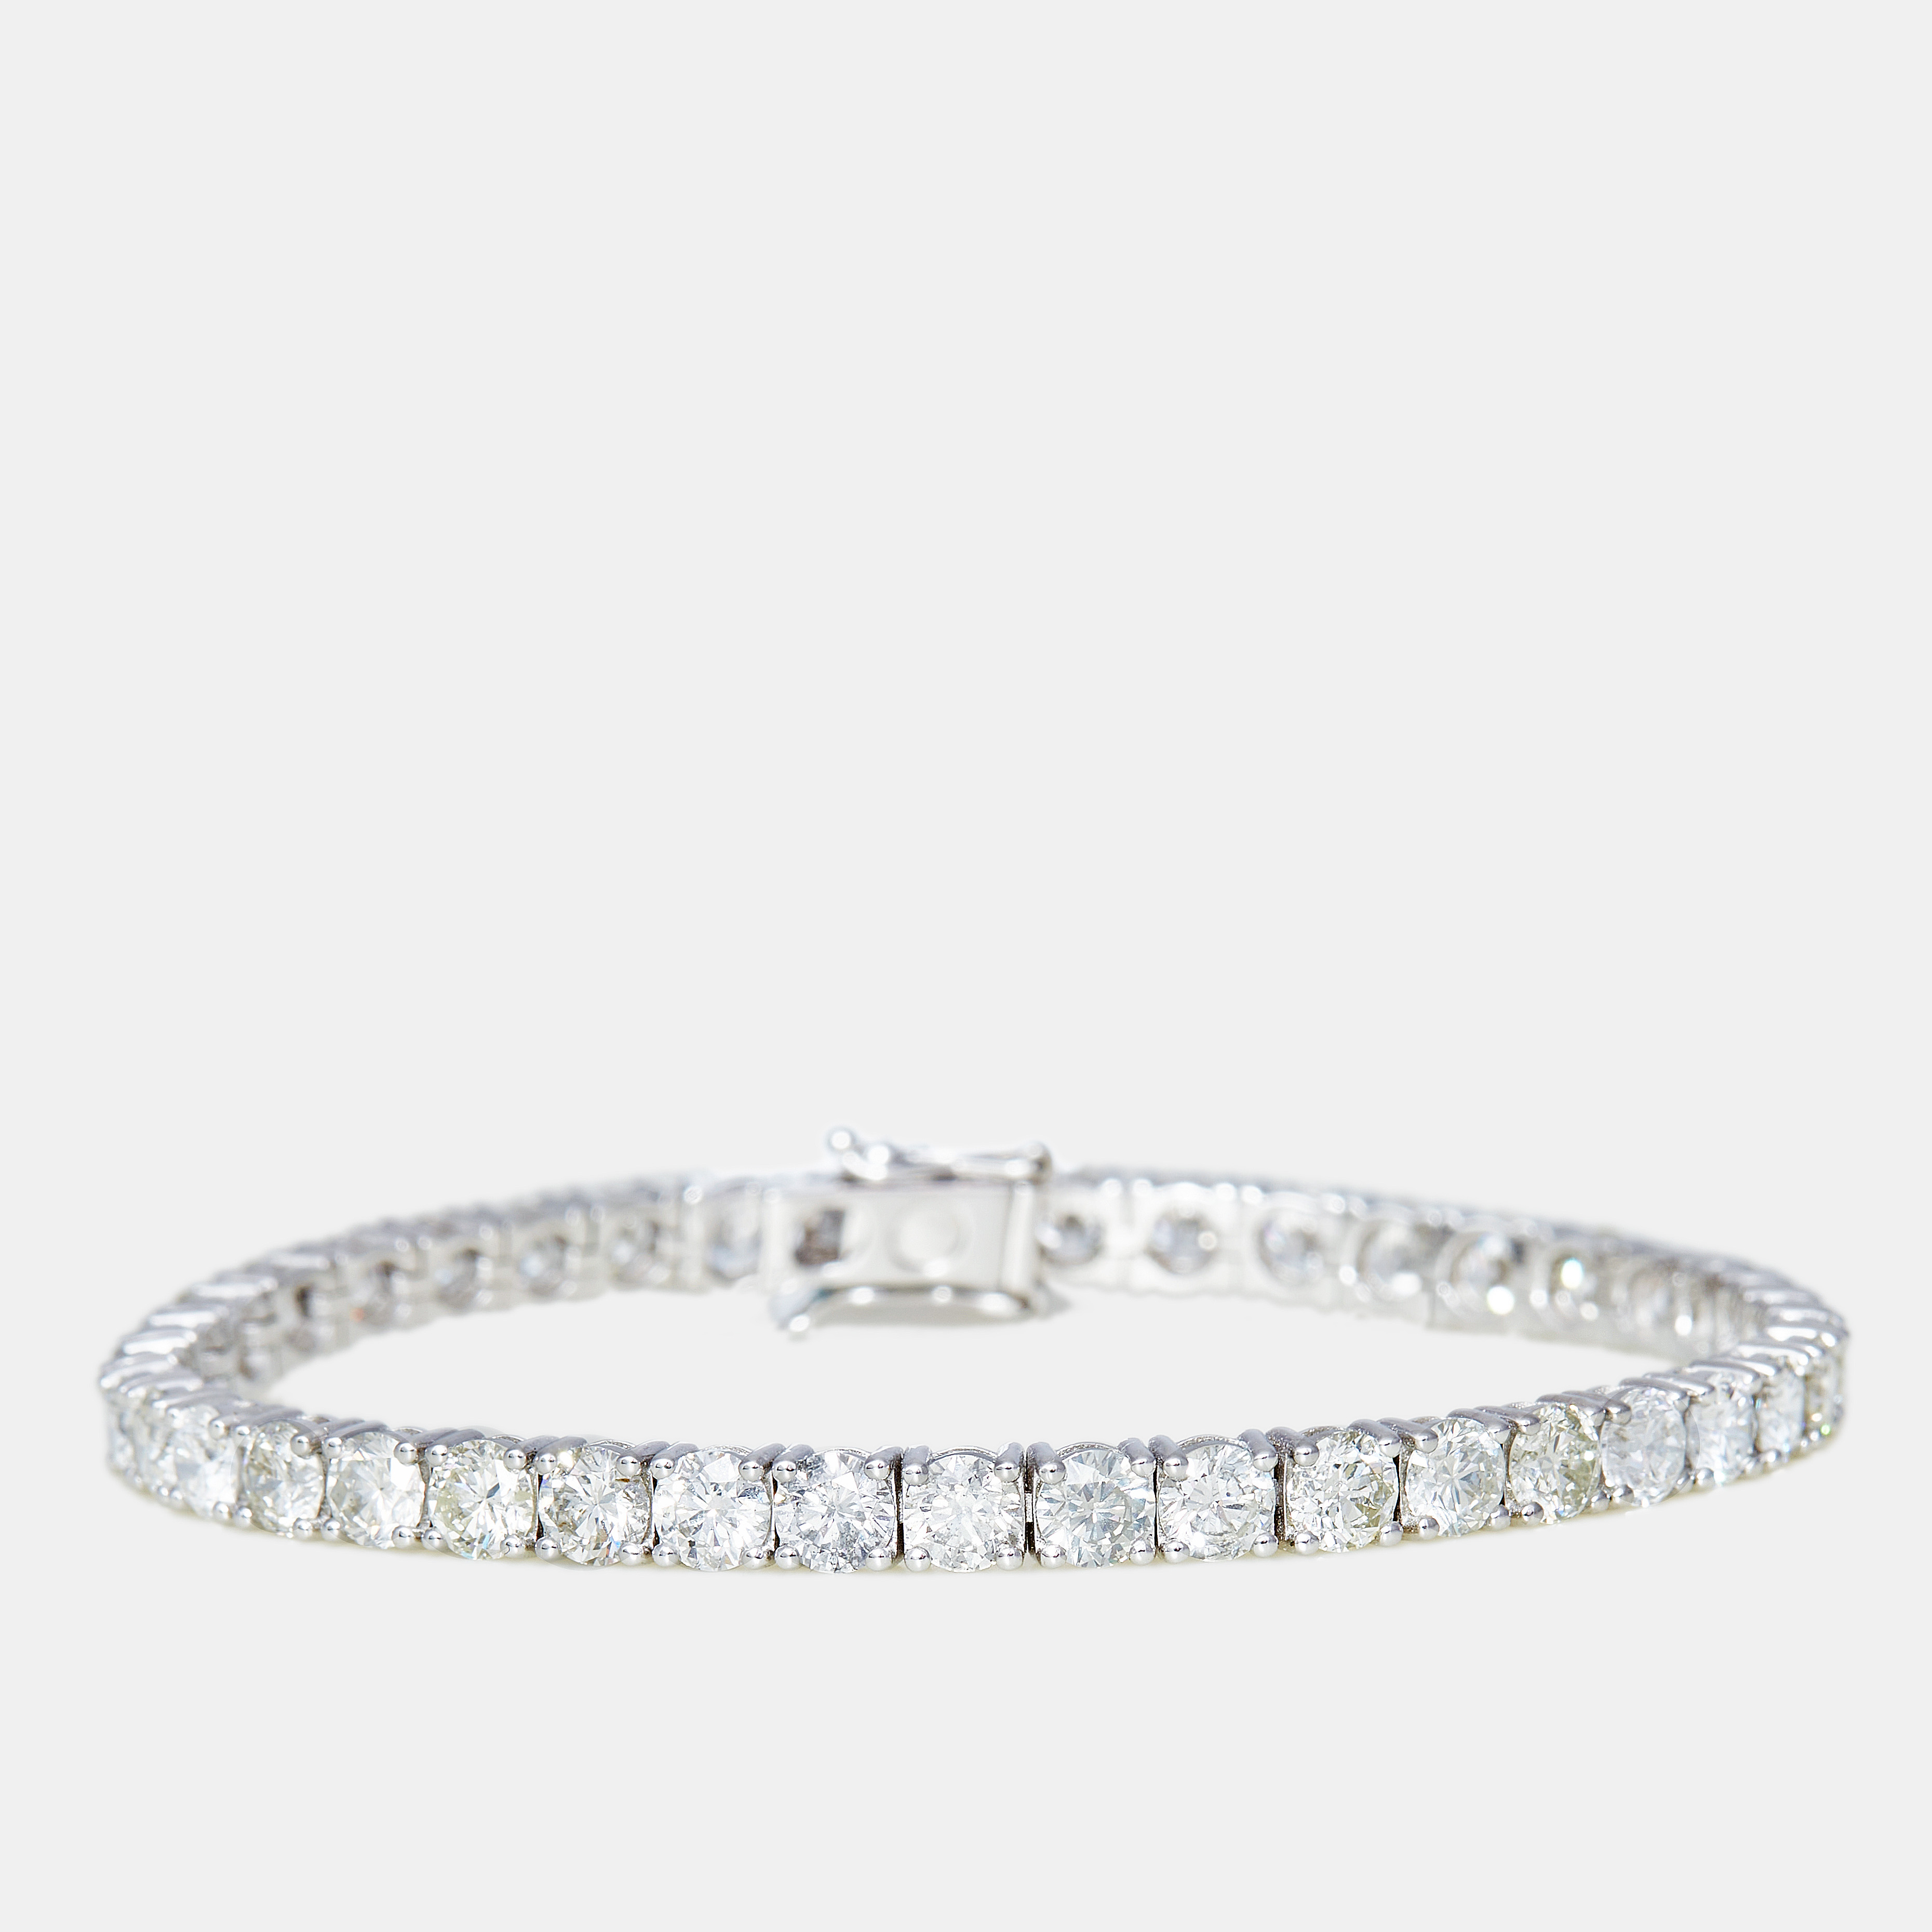 The diamond edit 18k white gold 10 ct diamond bracelet